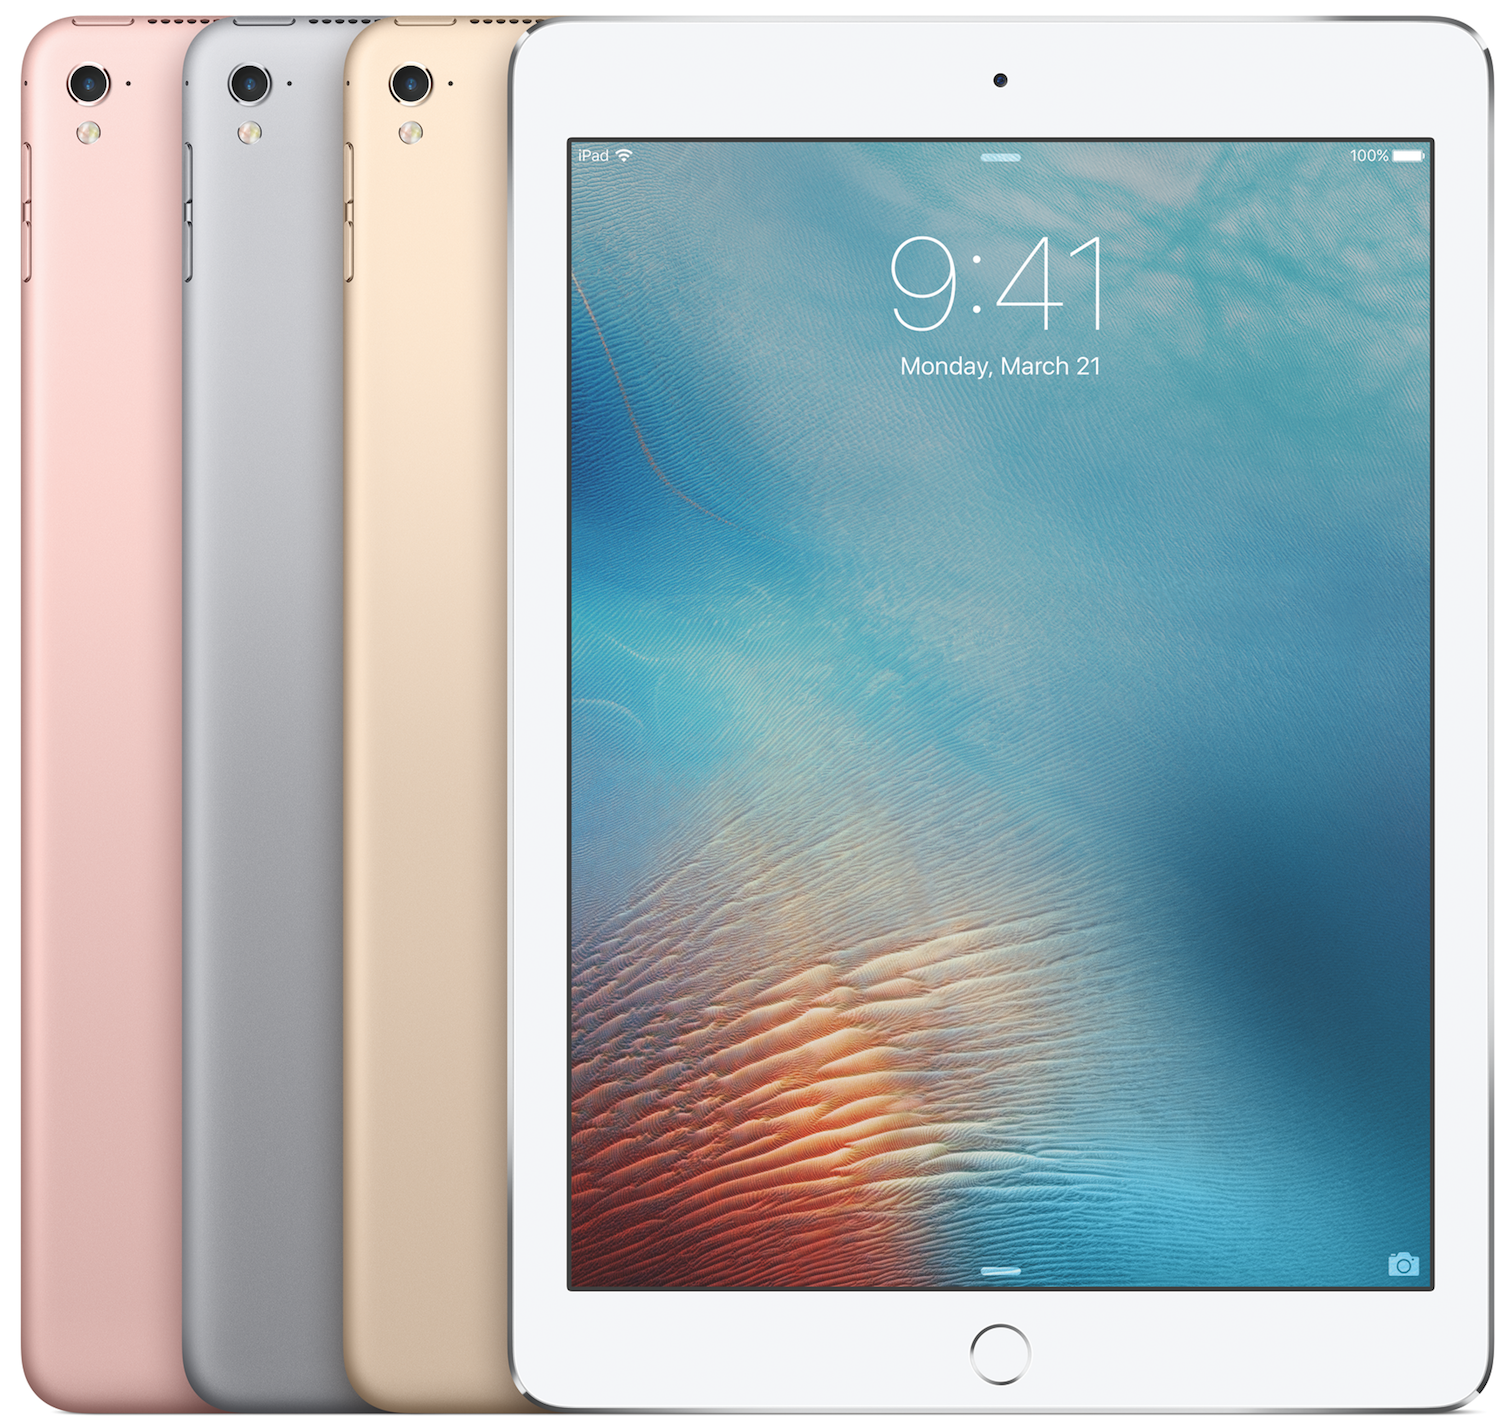 Apple iPad Pro 9.7" | A1674 | Cellular